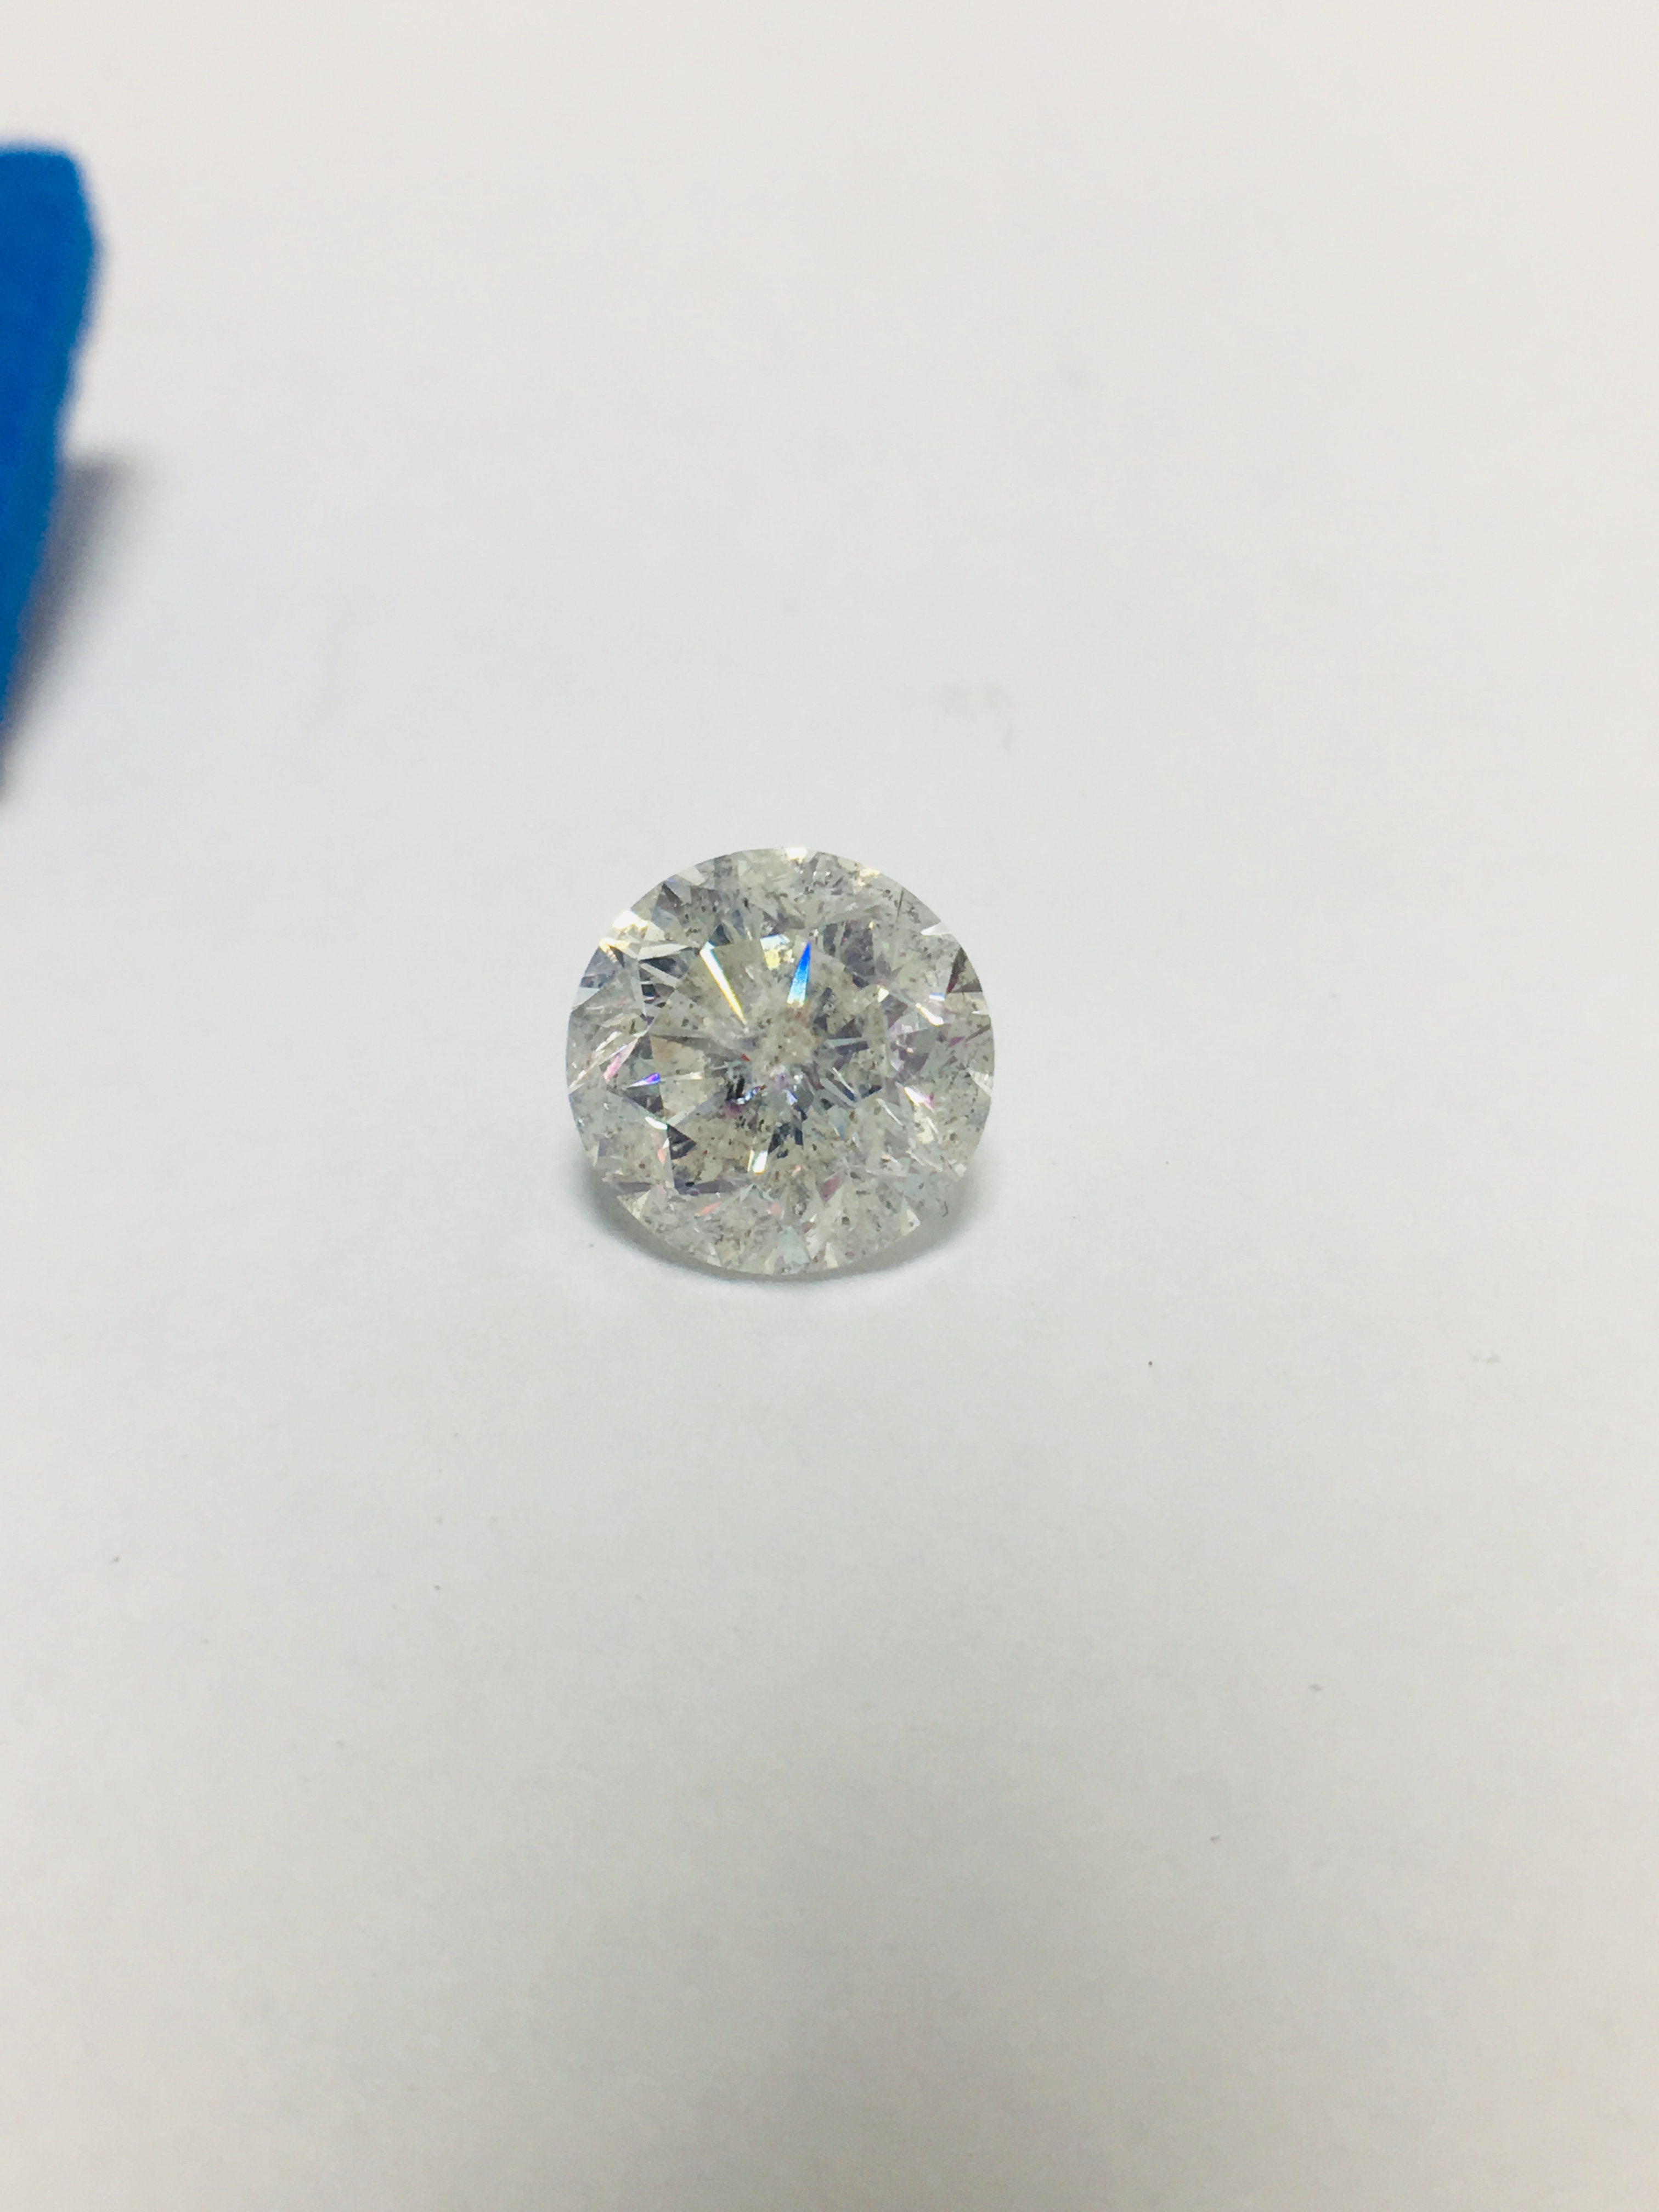 2.01ct round Brilliant cut natural diamond,H colour,si3 clarity - Image 3 of 3